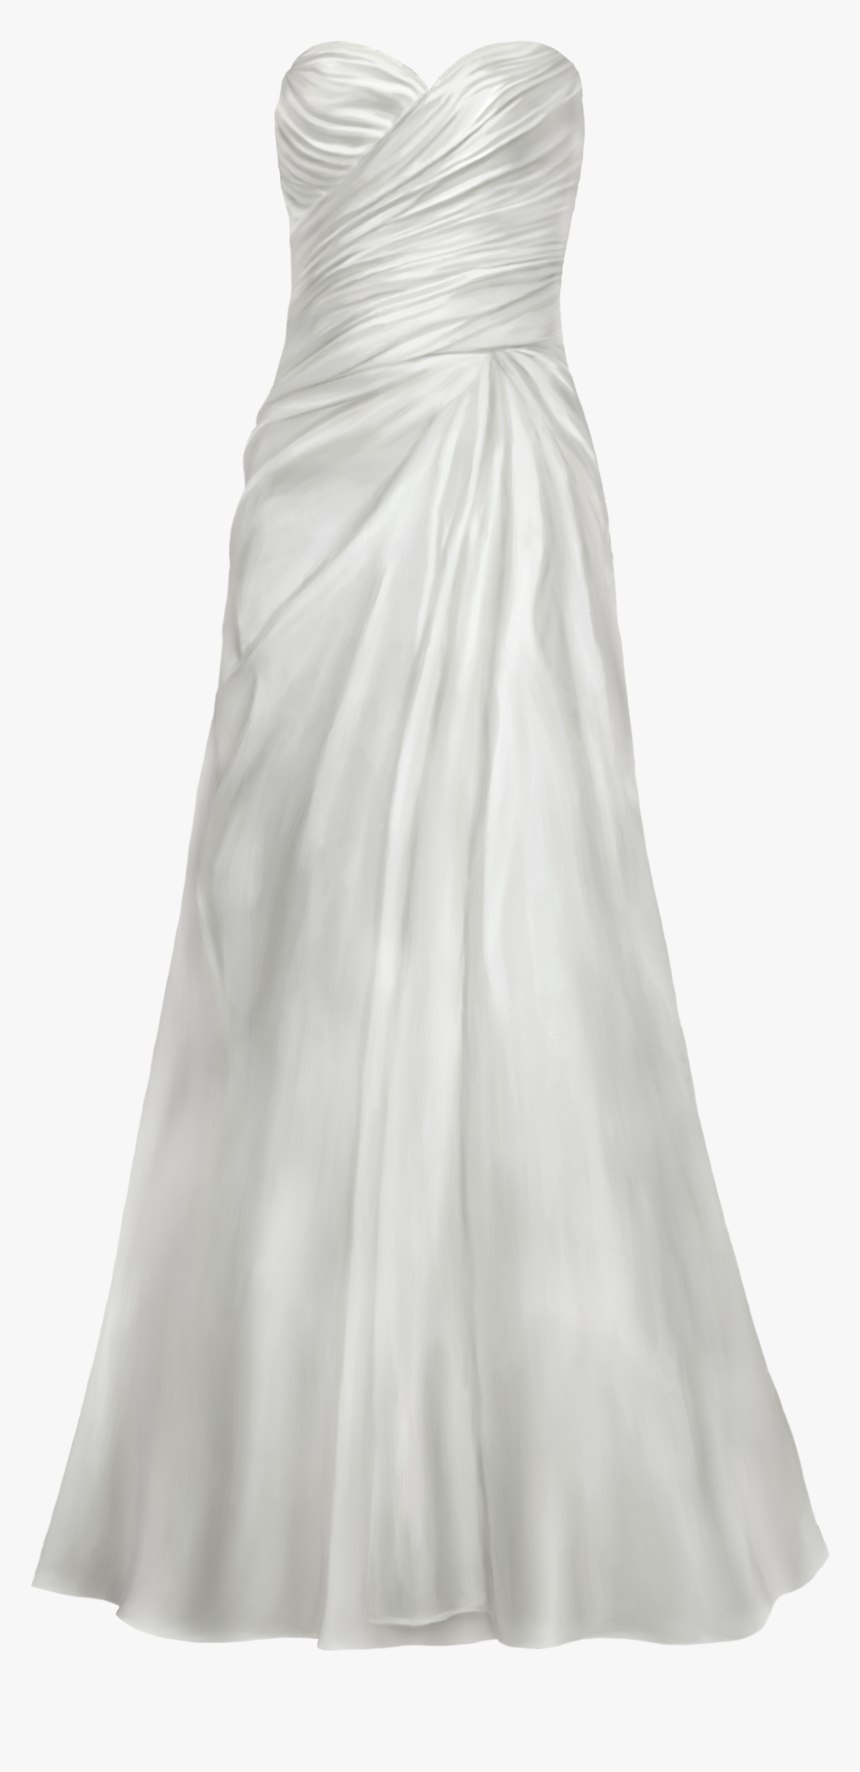 Satin Wedding Dress Png Clip Art - Wedding Dress Transparent Png, Png Download, Free Download